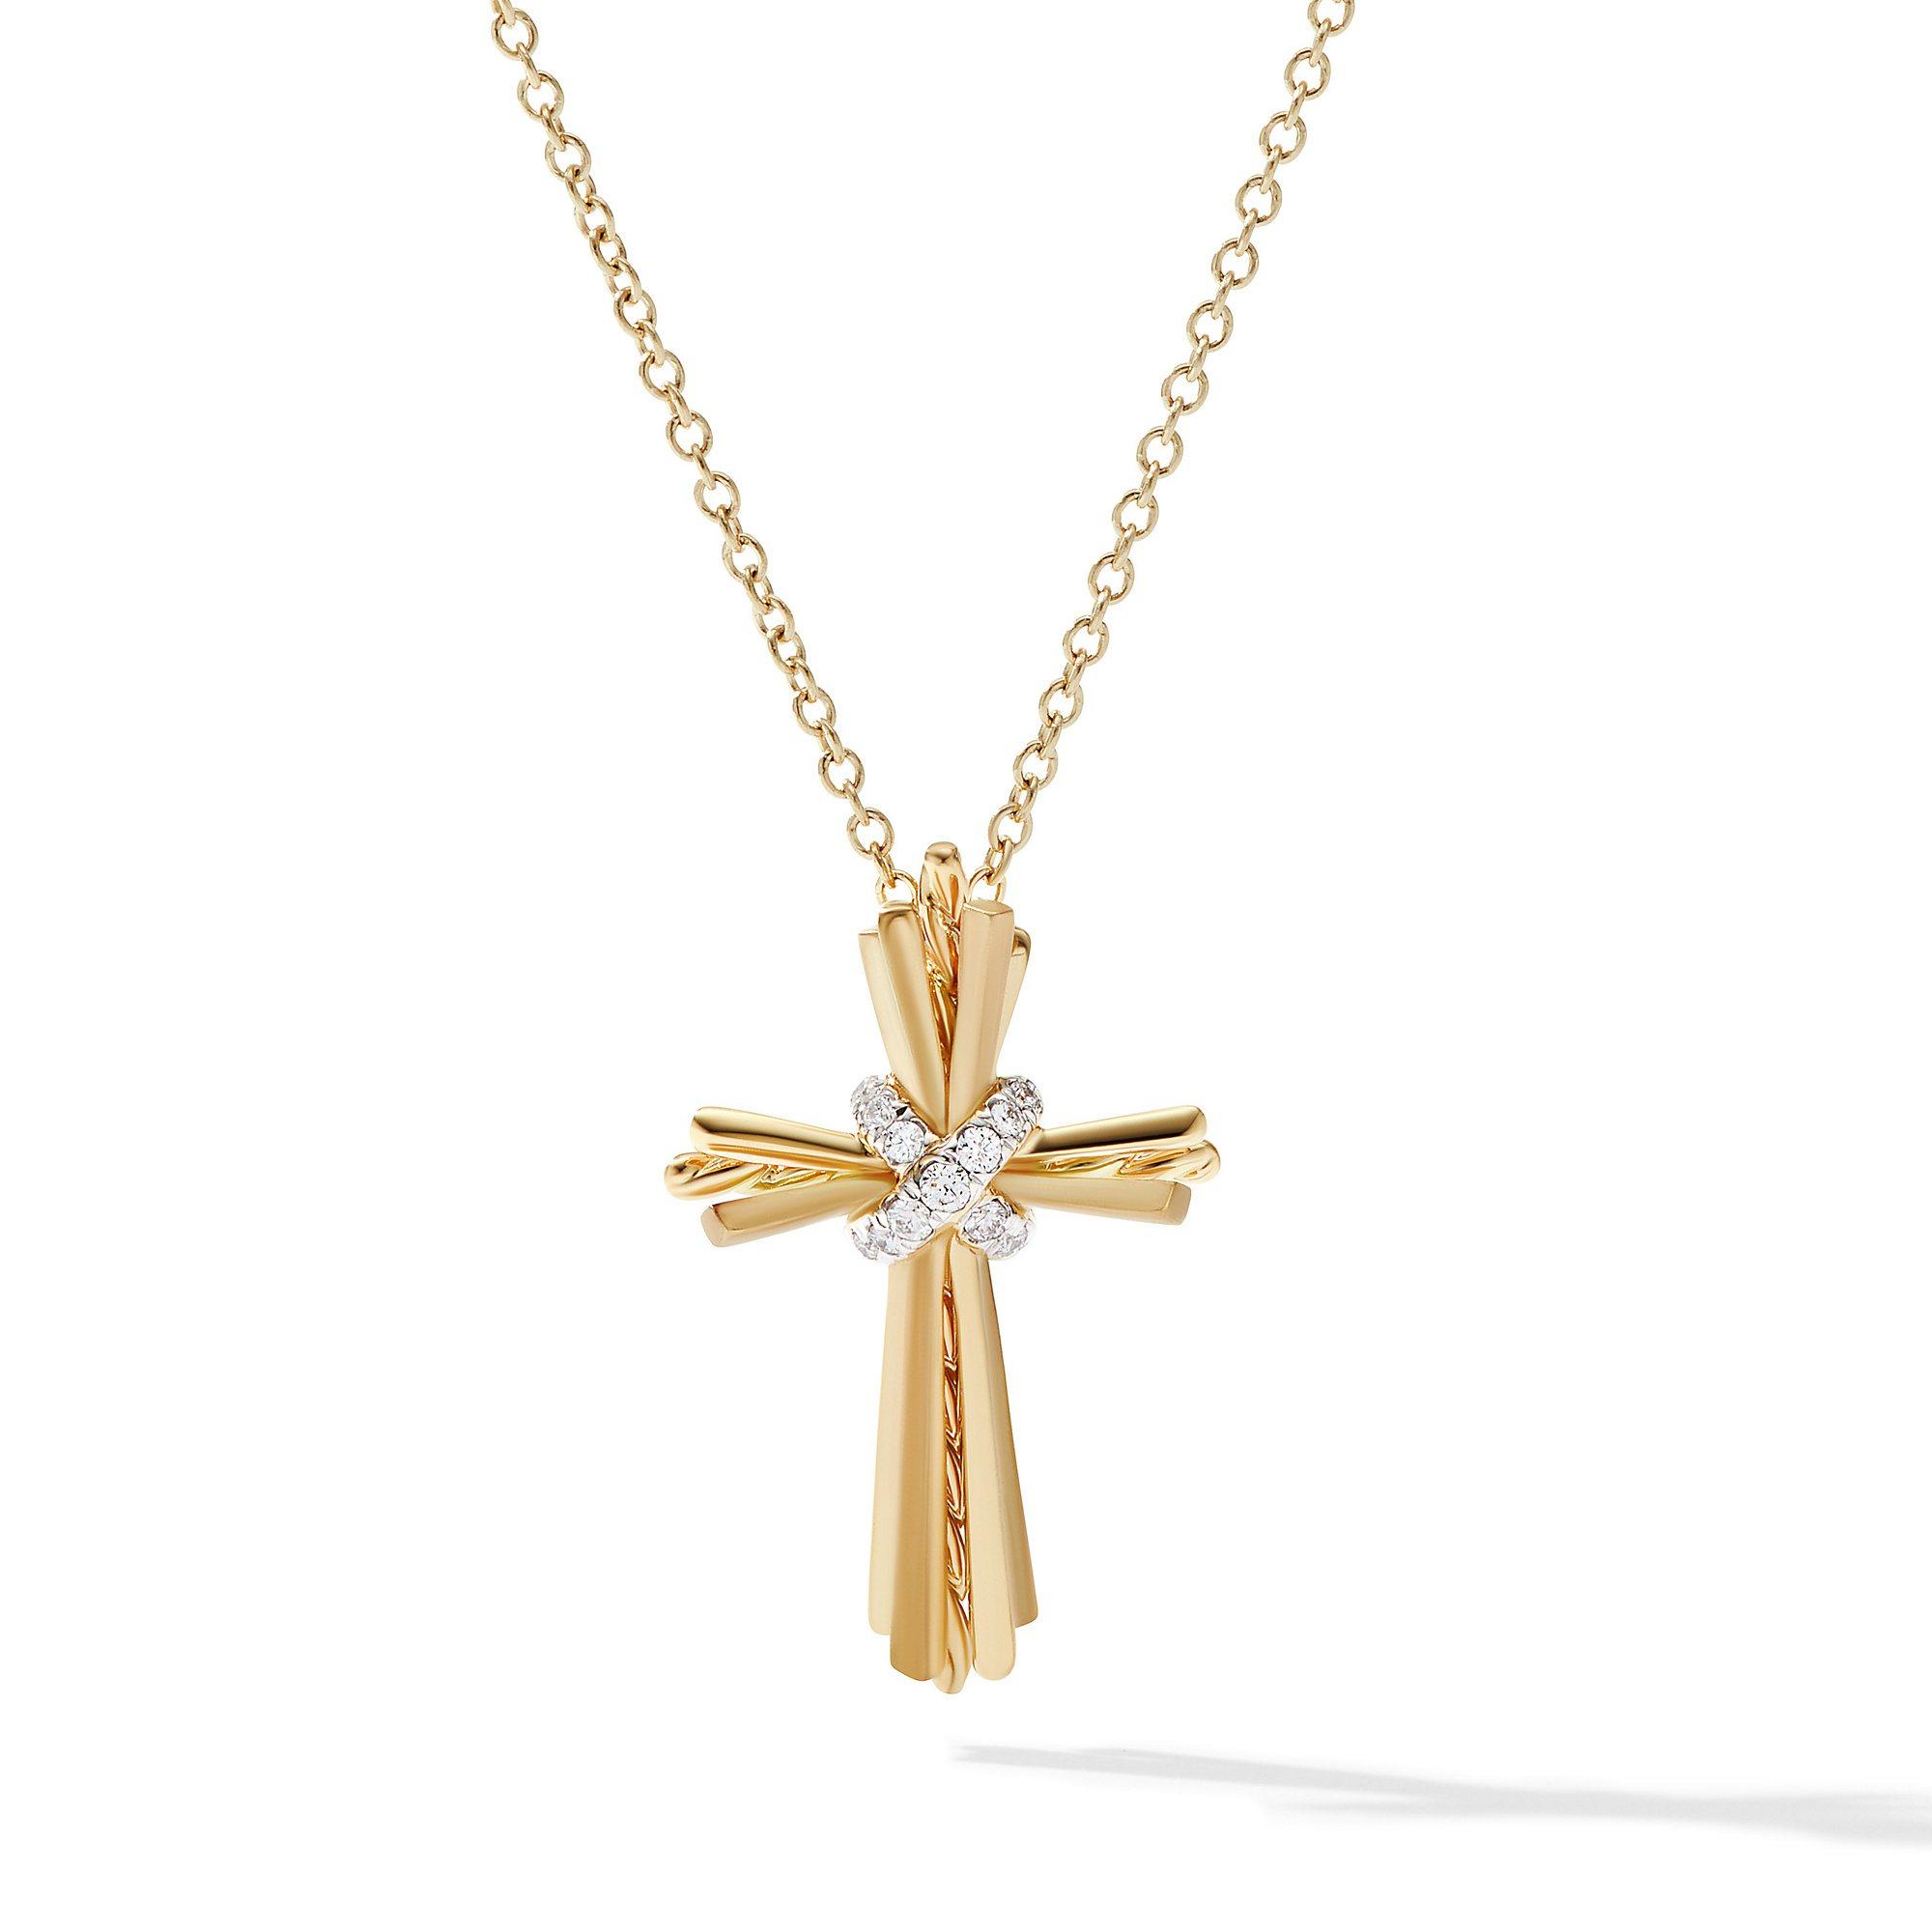 David Yurman Angelika Cross Necklace with Pave Diamonds, 21mm